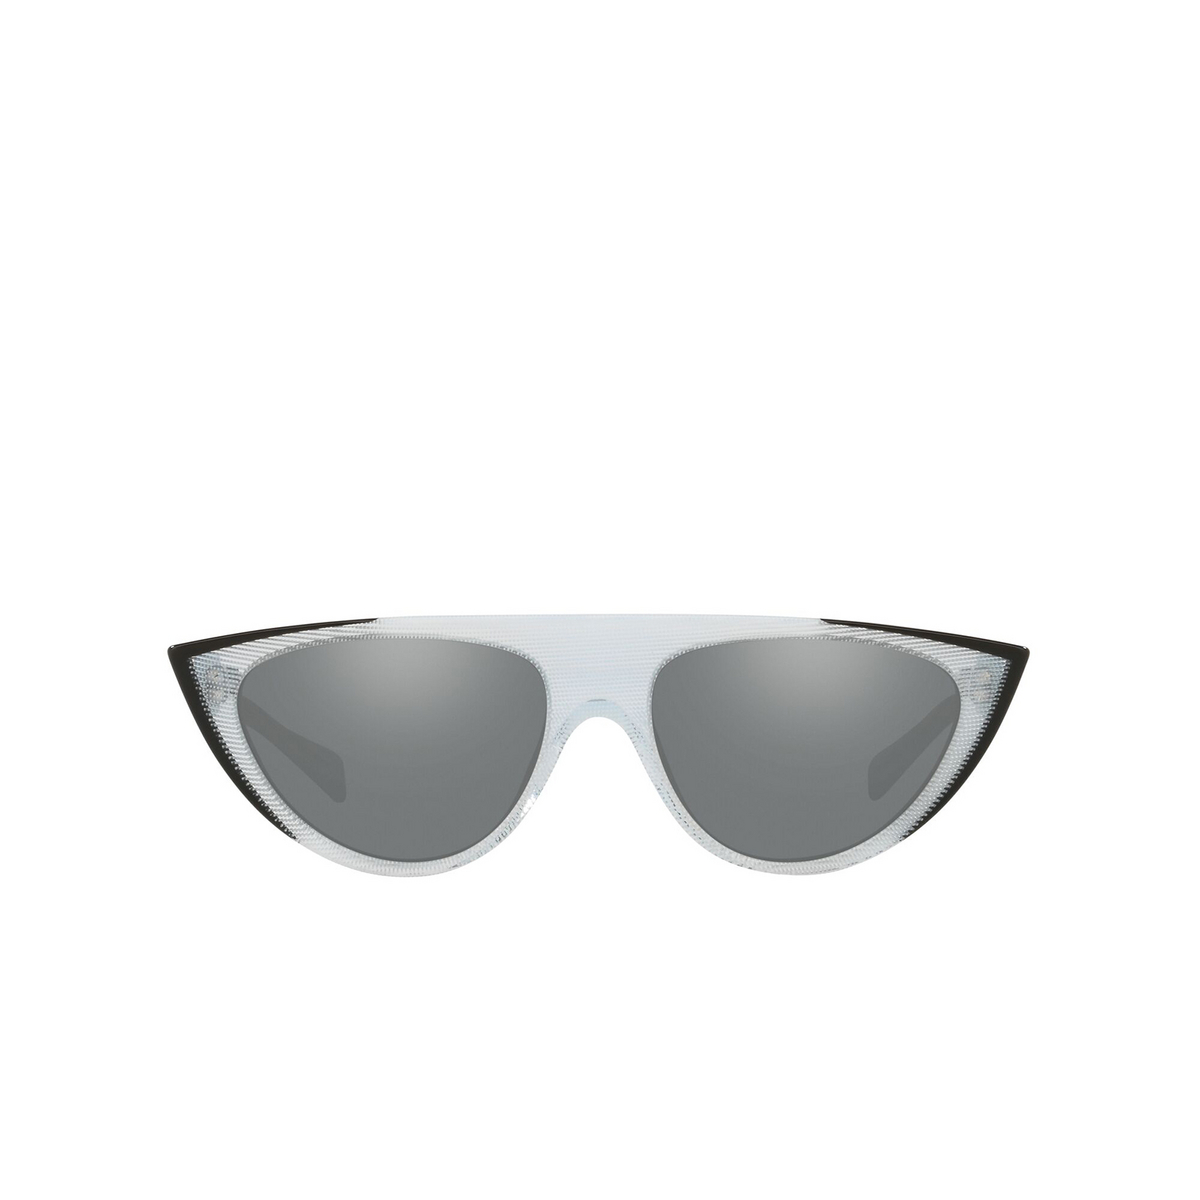 Alain Mikli® Irregular Sunglasses: Miss J A05031 color Black / White Pointille 007/6G - front view.